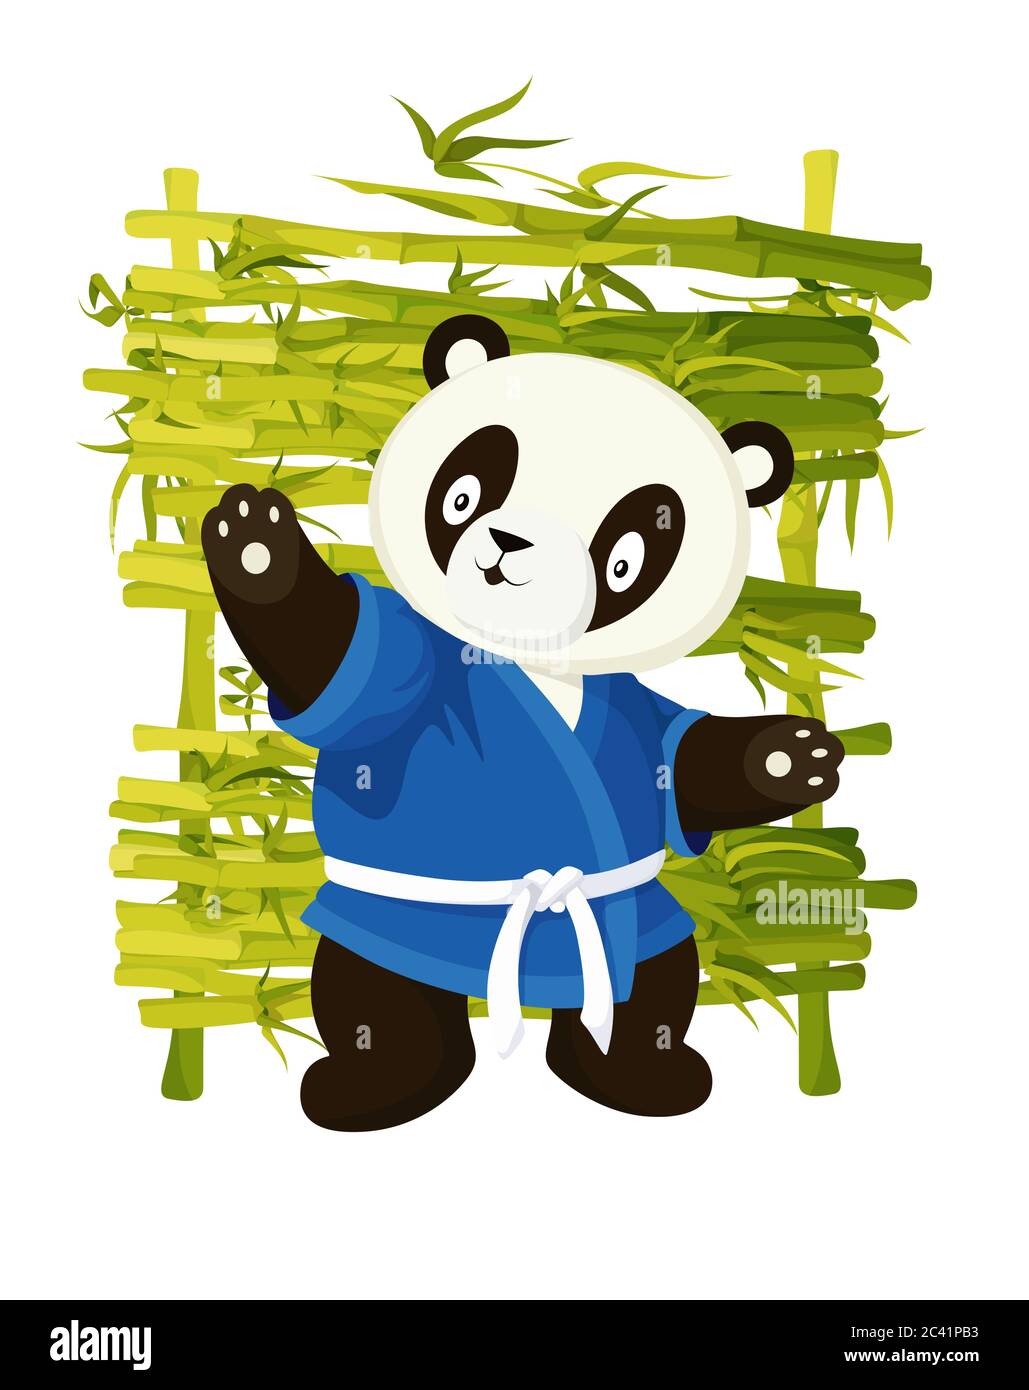 Lindo oso panda, reuniendo tallos de bambú plana ilustración aislada de vectores Ilustración del Vector